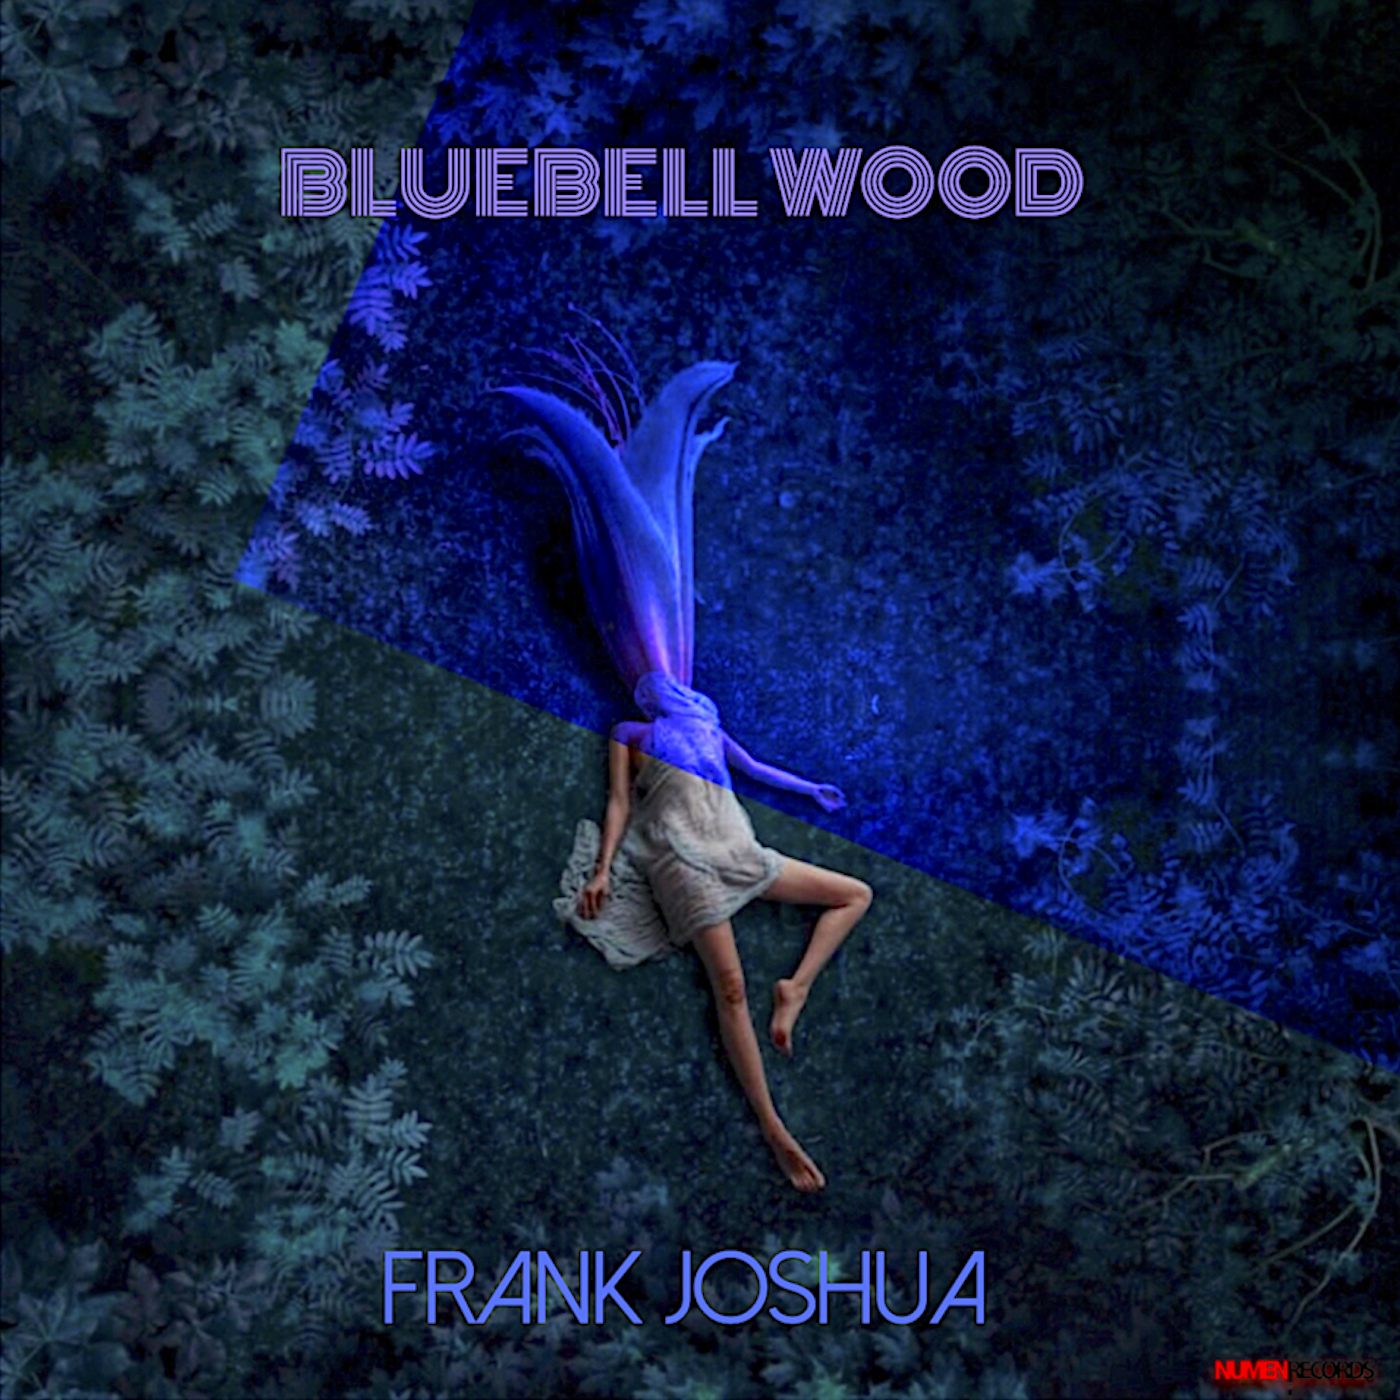 Frank Joshua’s in love in “Bluebell Wood”